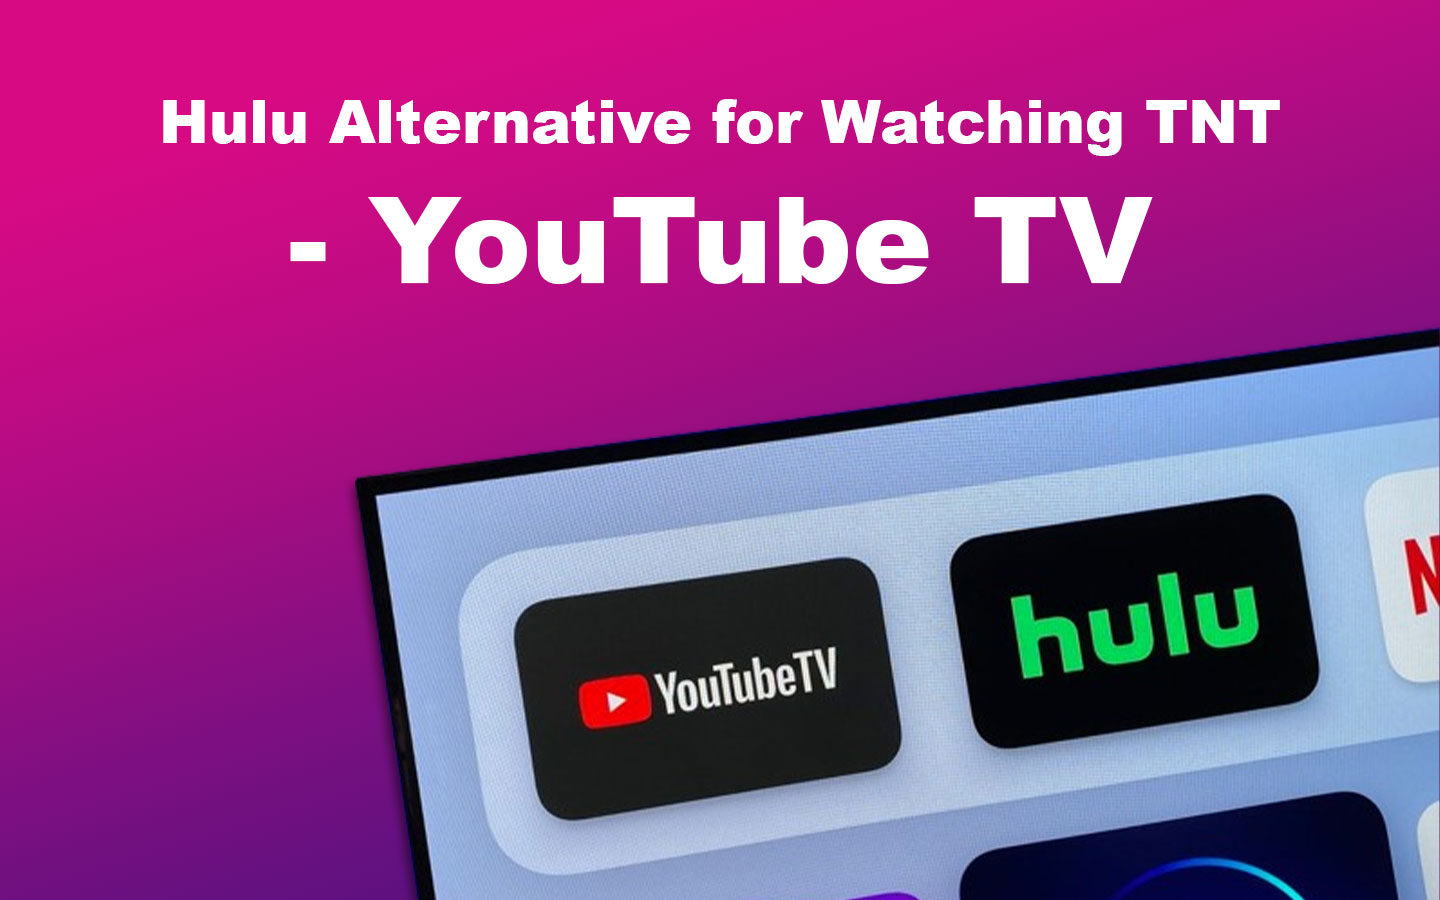 Hulu Alternative for Watching TNT - YouTube TV